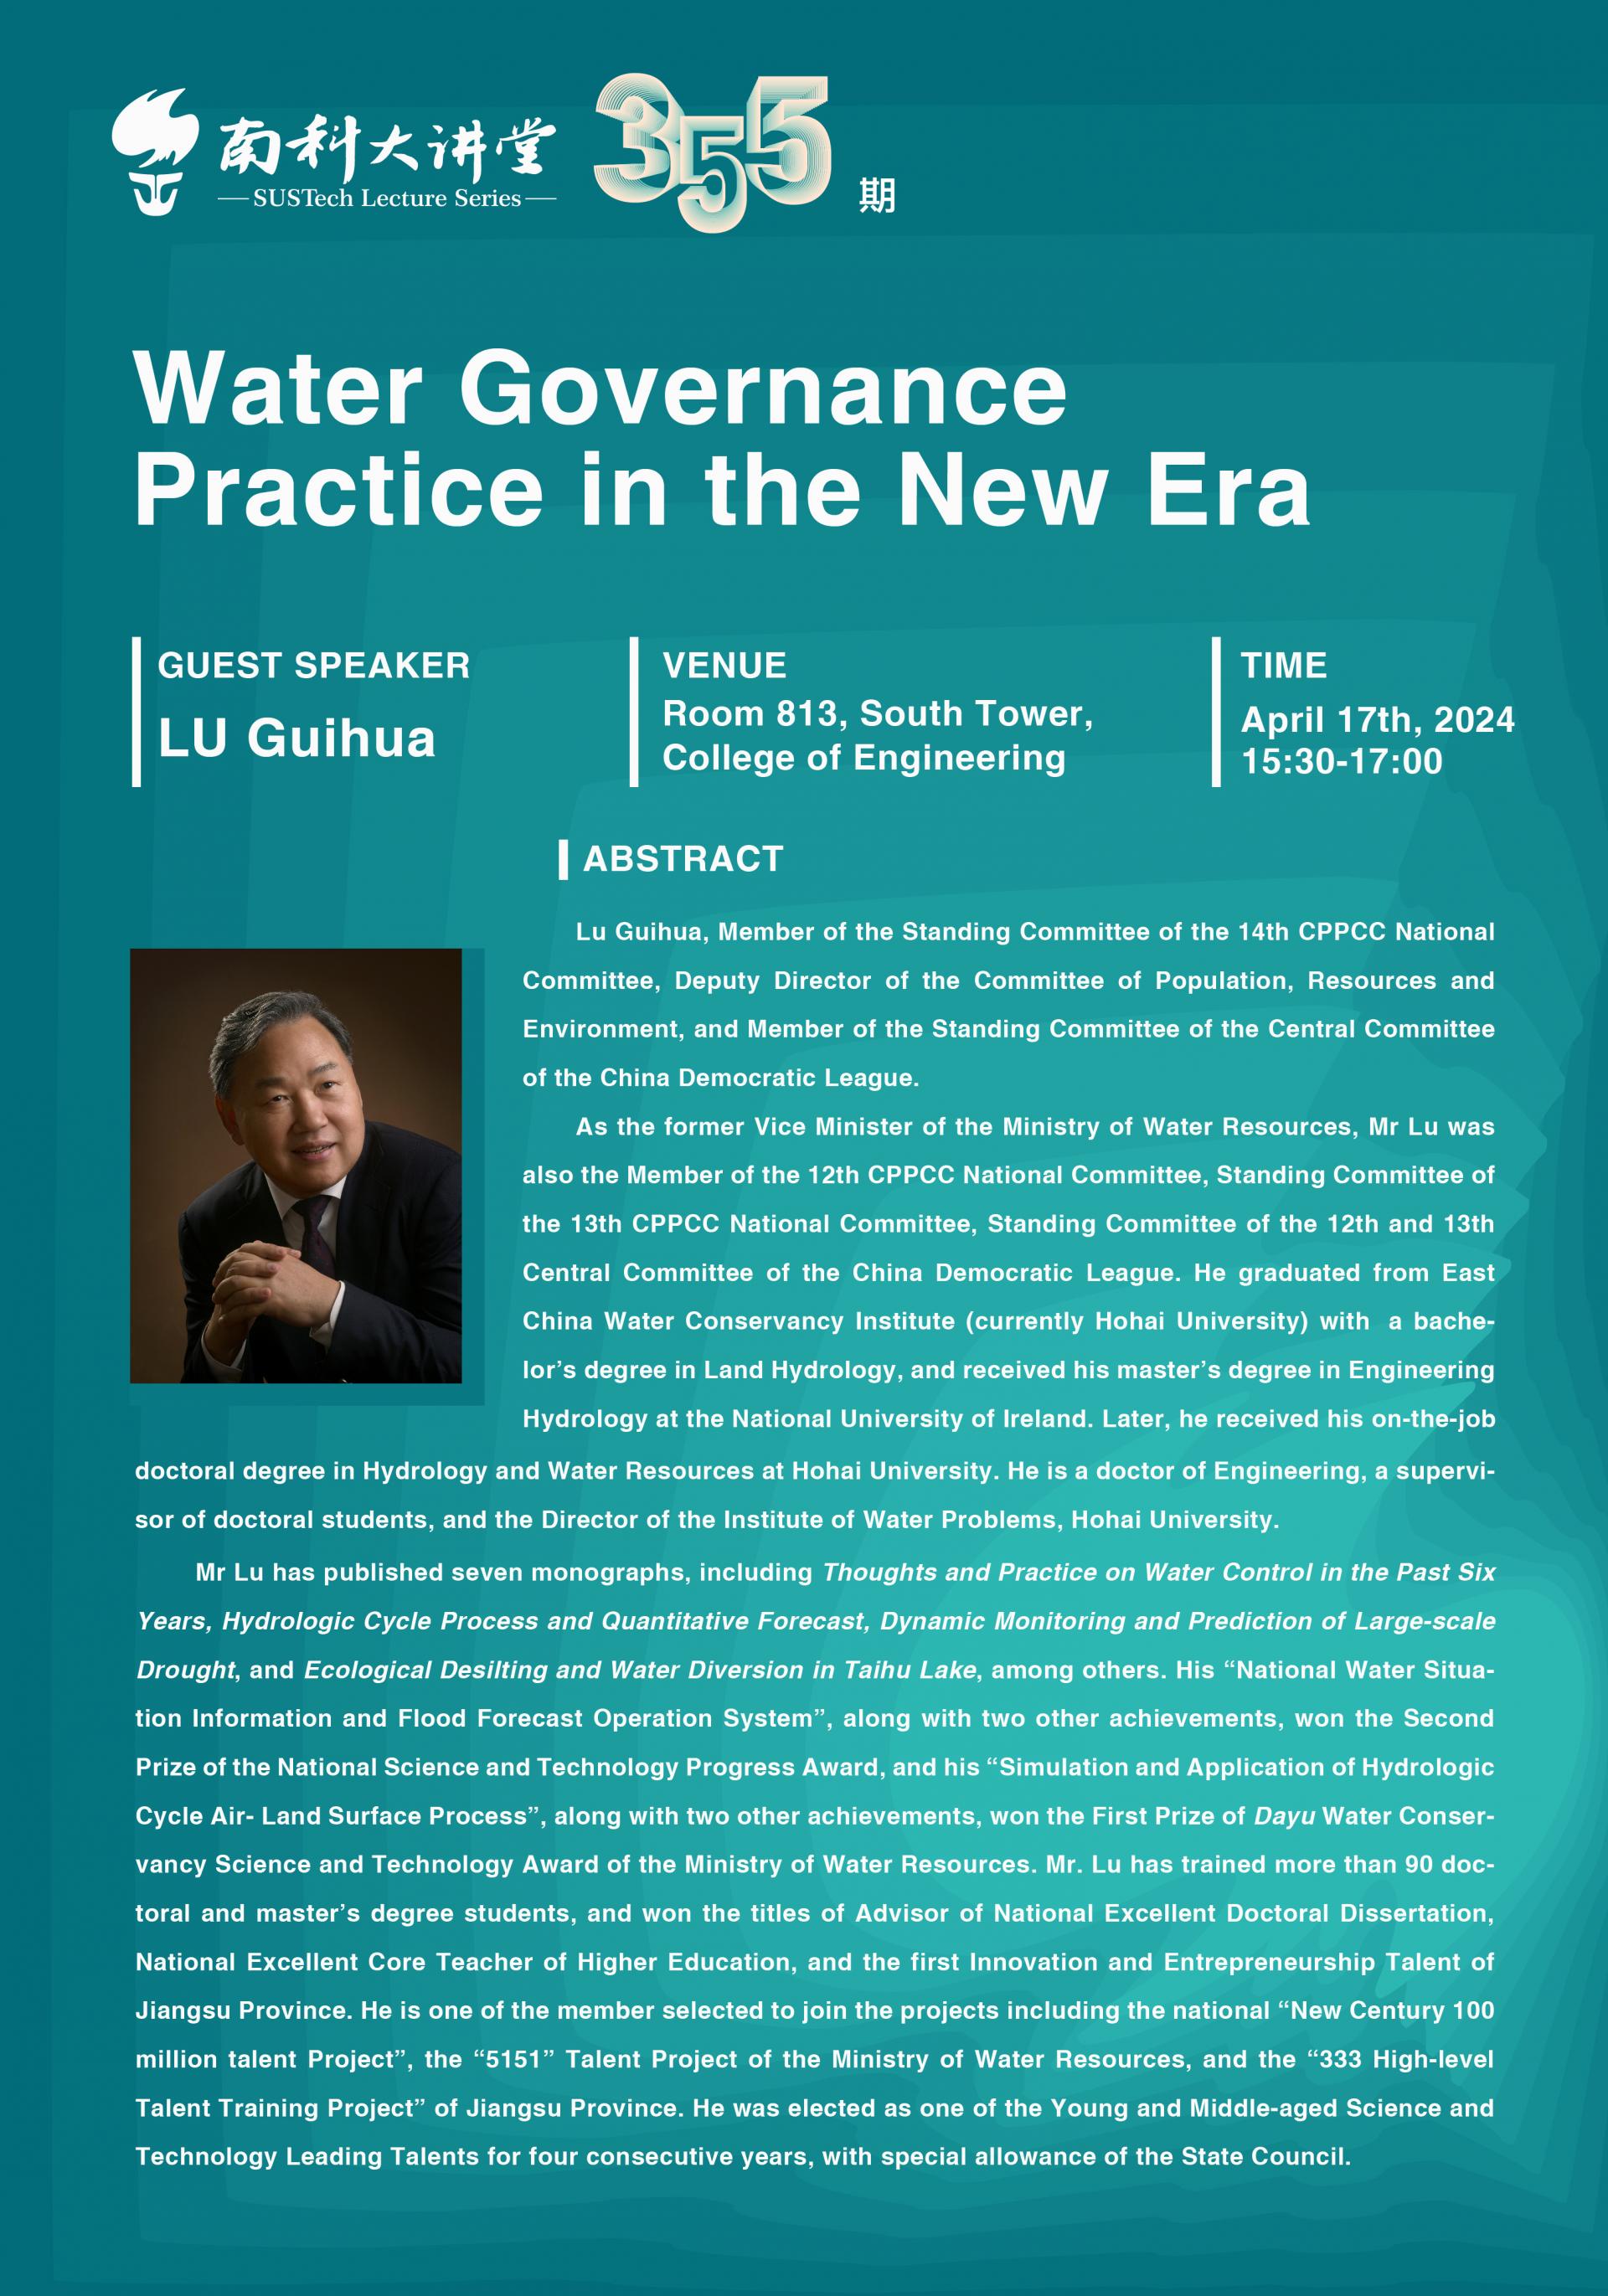 _Water Governance Practice in the New Era.jpg